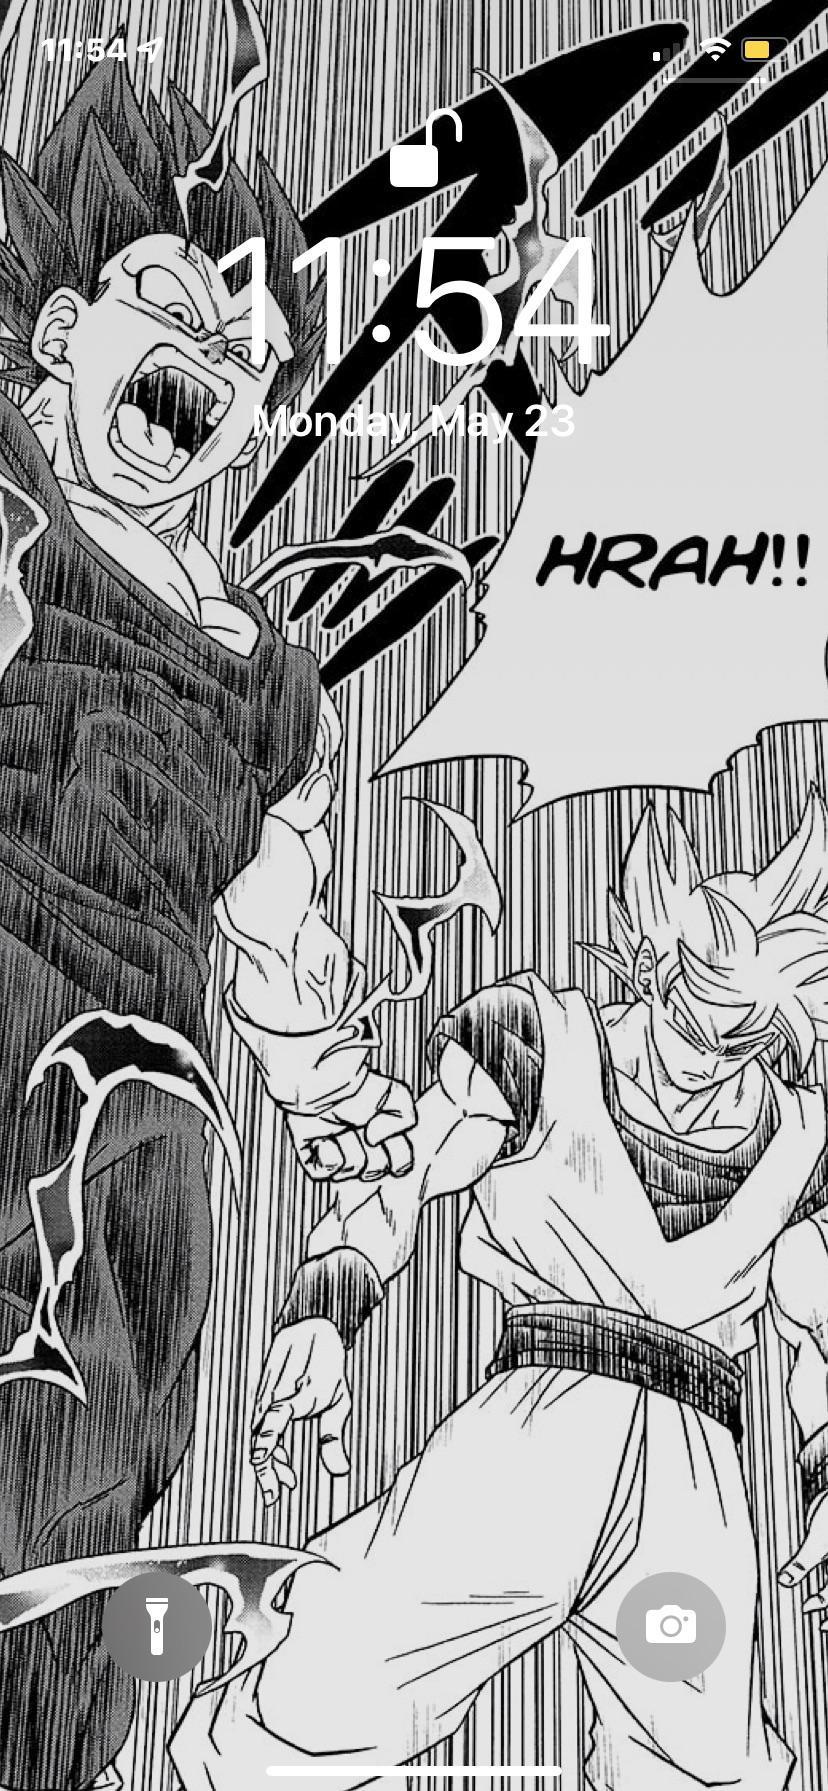 This Manga Panel Makes For A Great Wallpaper R Dragonballsuper